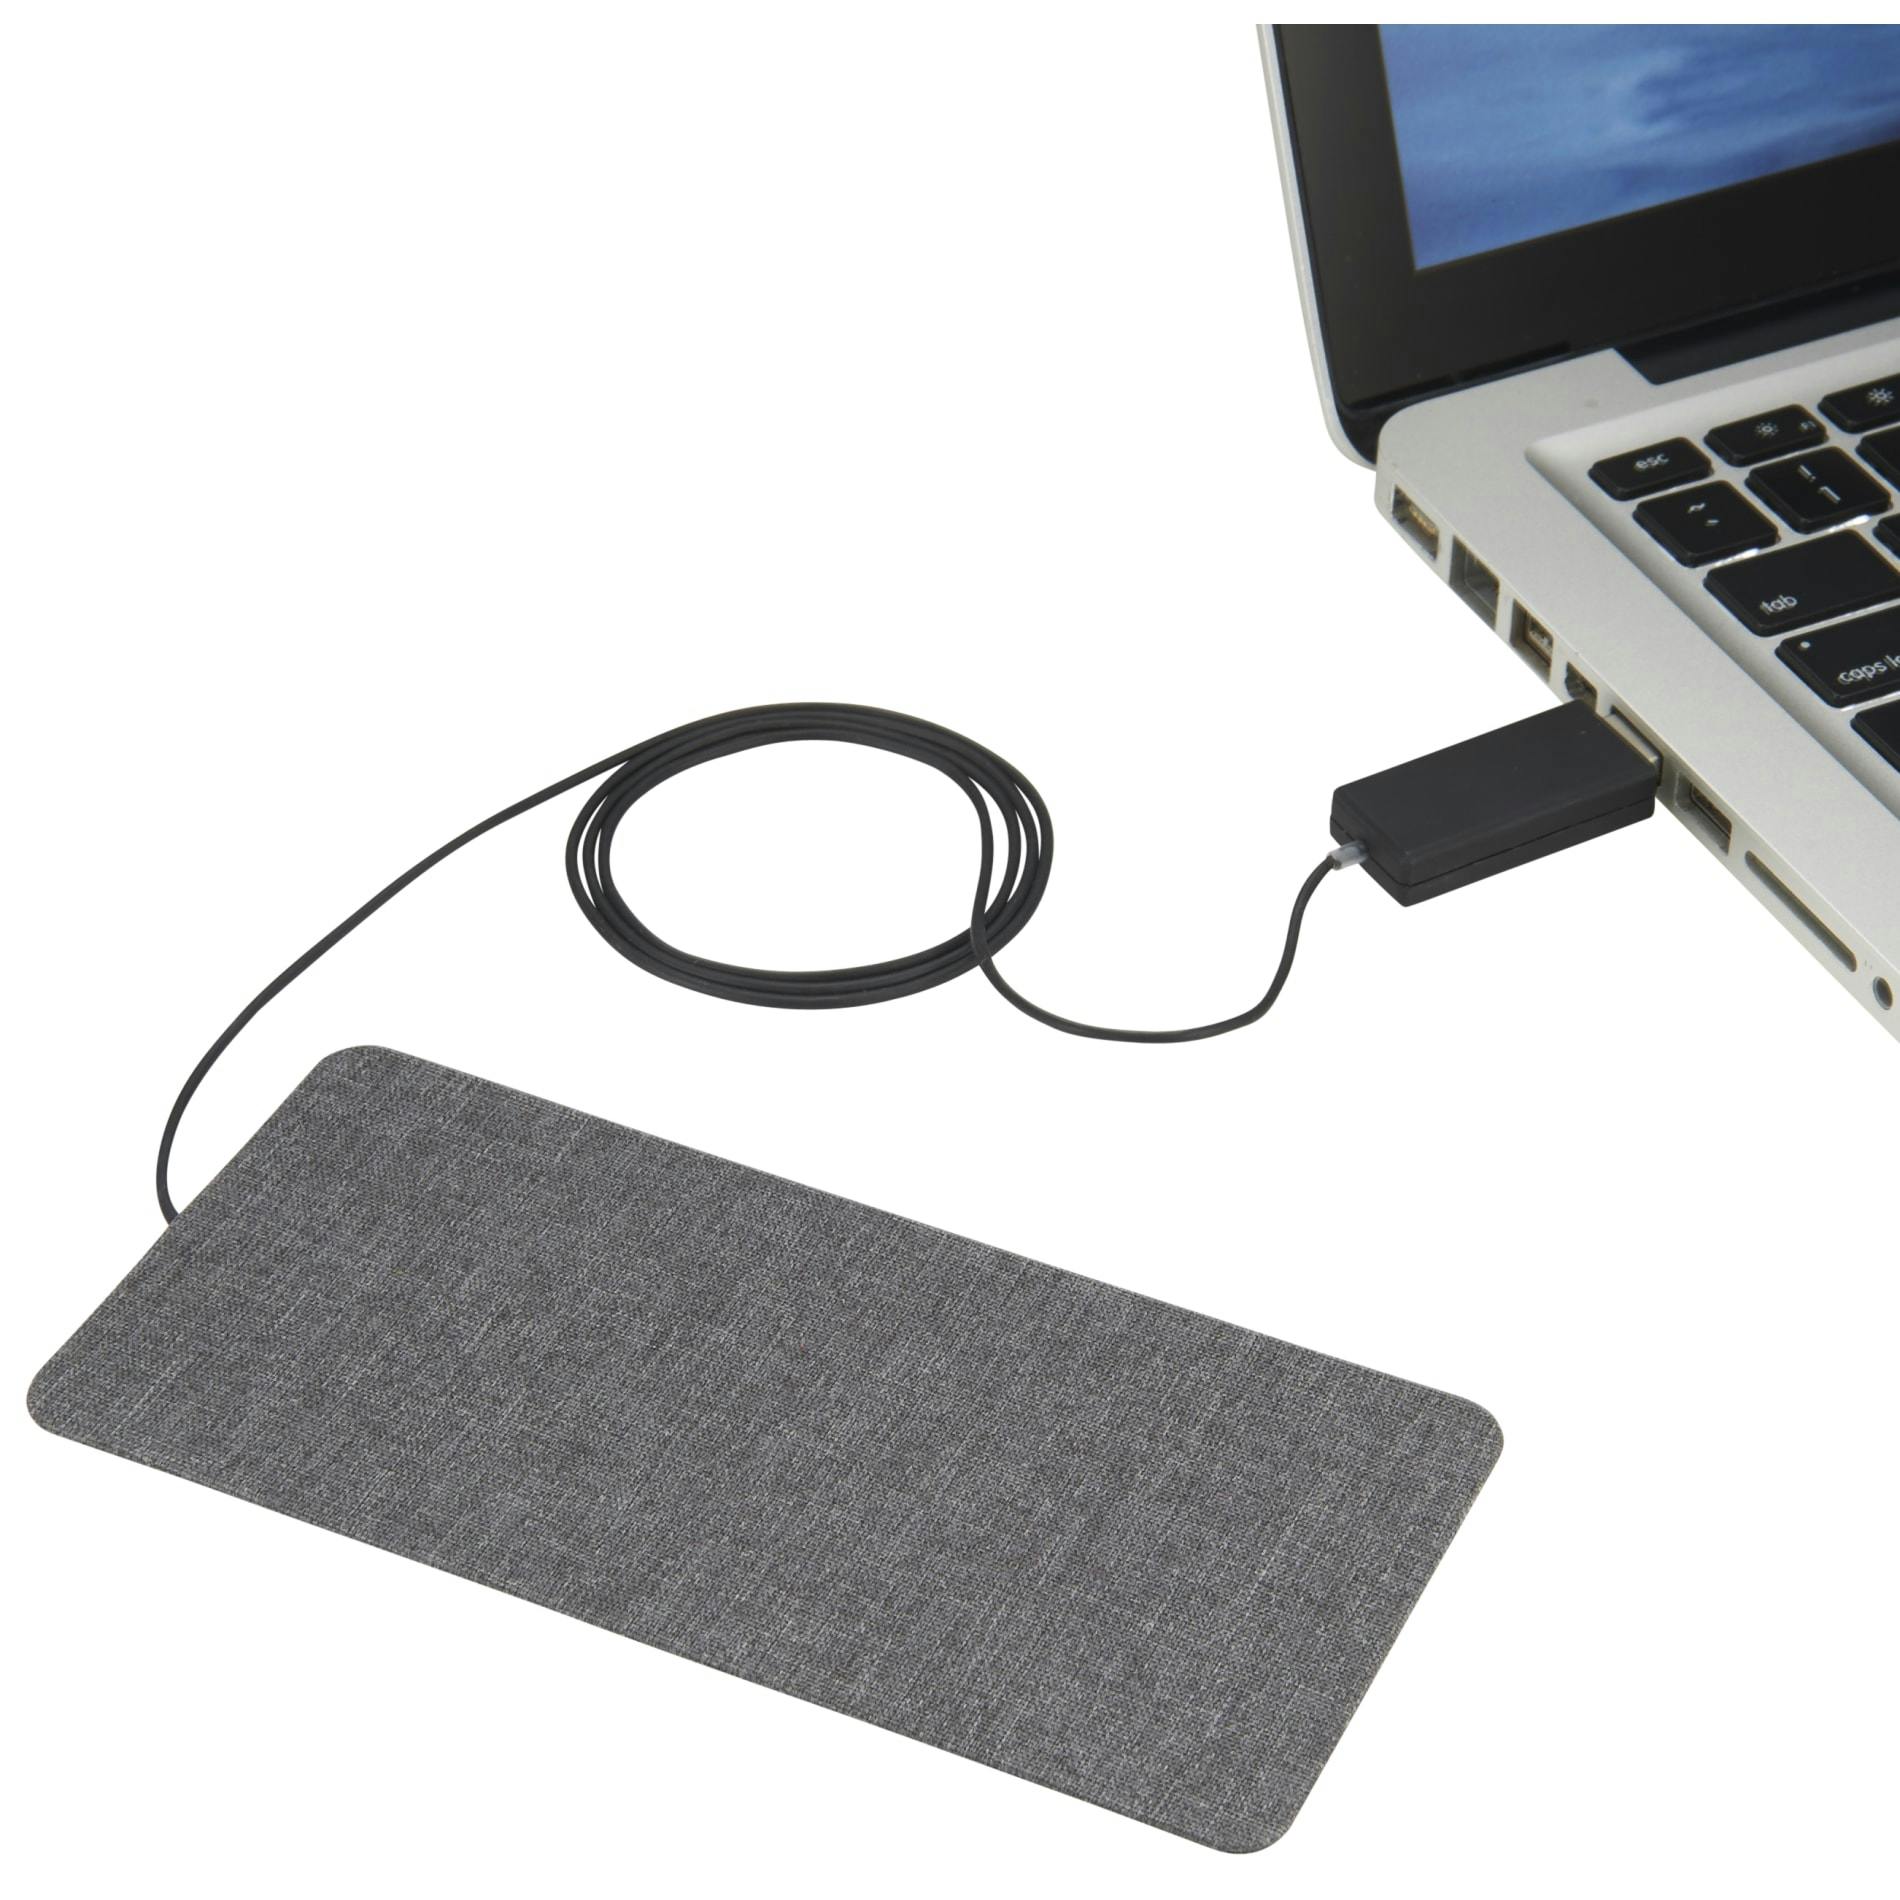 Ultra Thin Fabric Wireless Charging Pad - additional Image 4